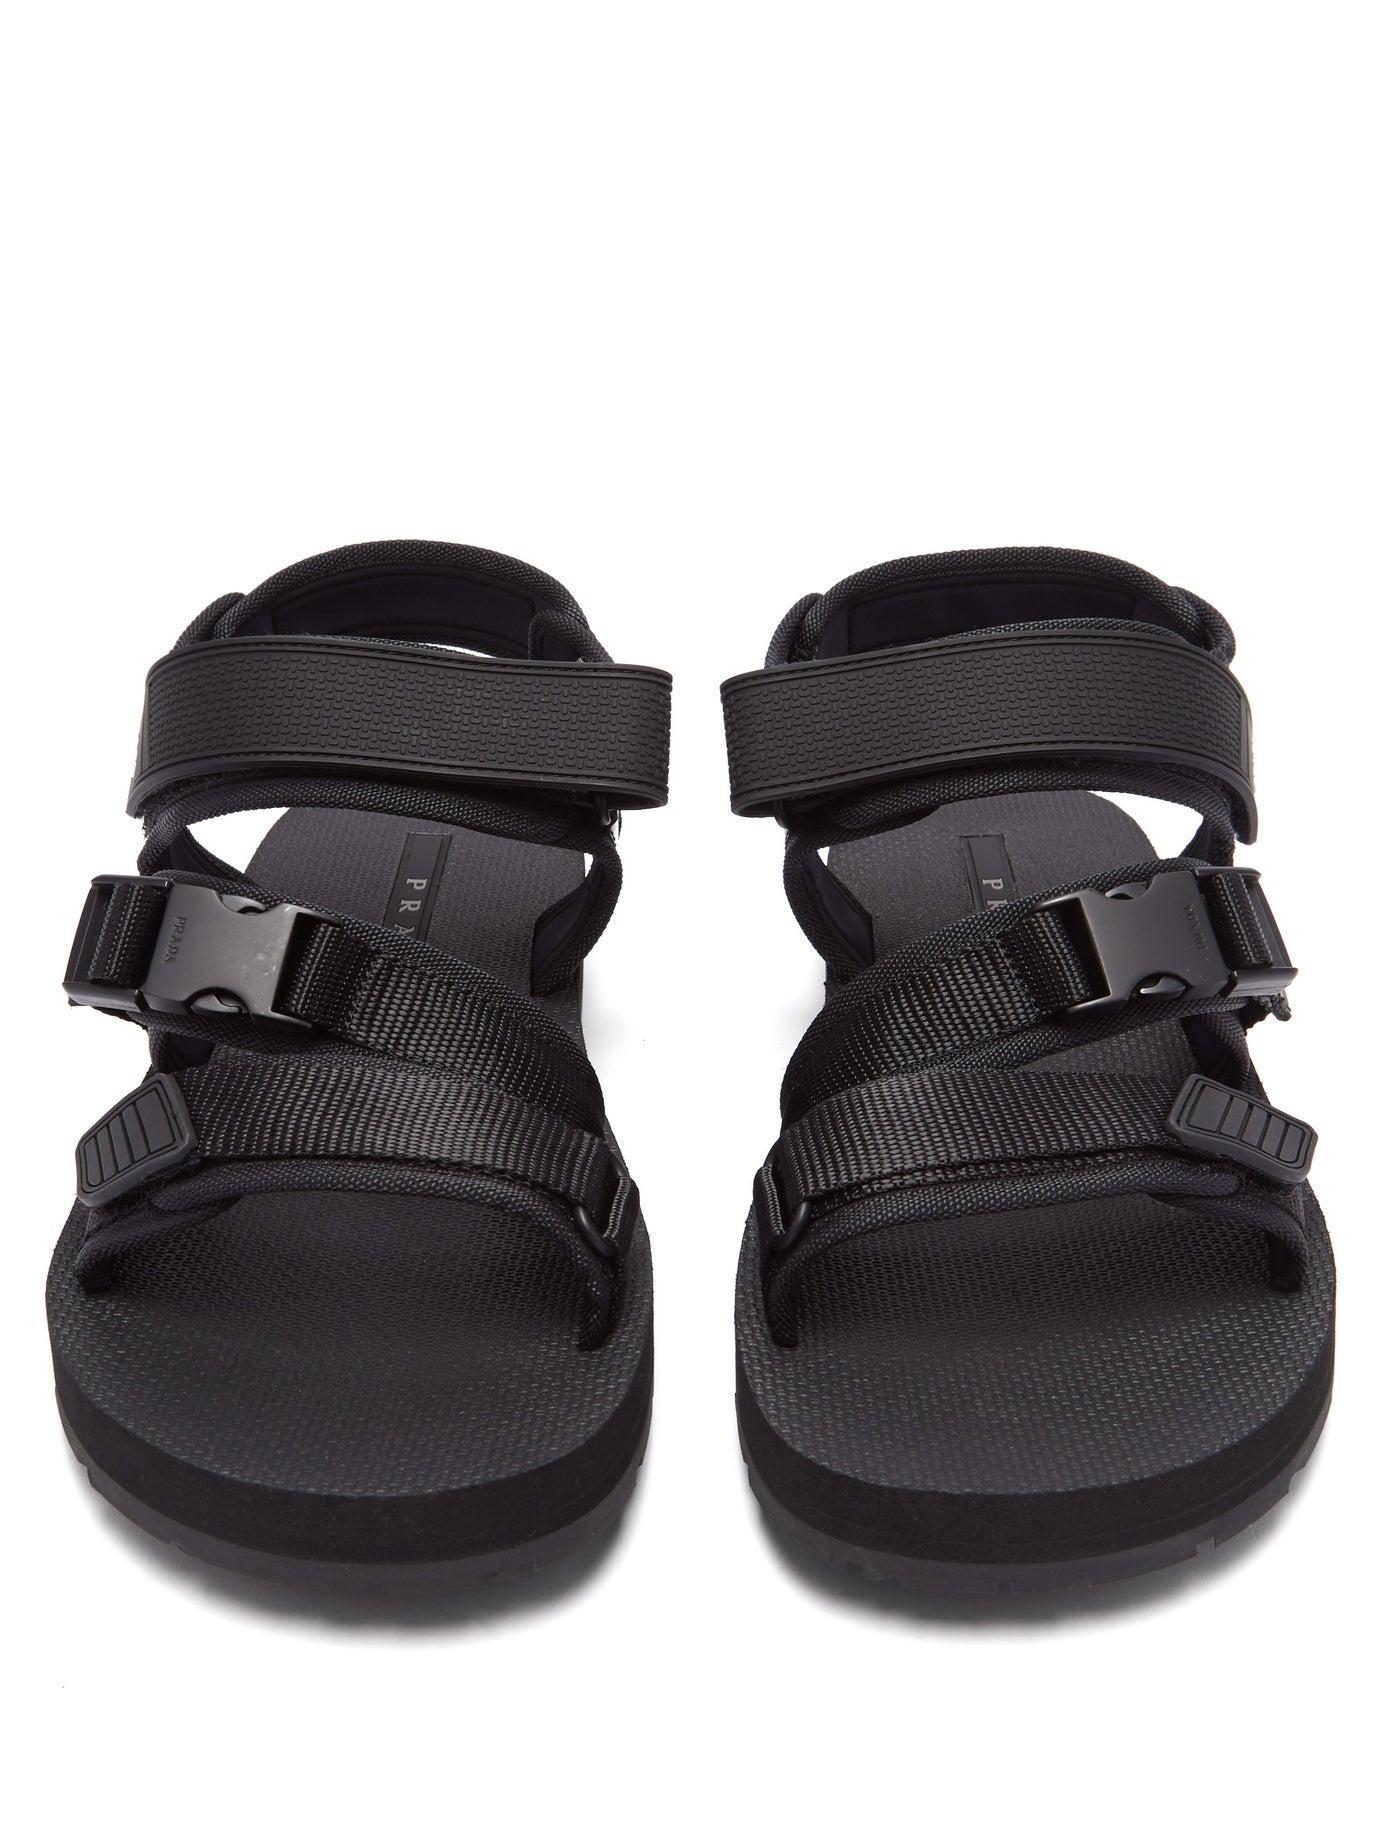 Prada Clip Buckle-fastening Velcro-strap Sandals in Black for Men - Lyst